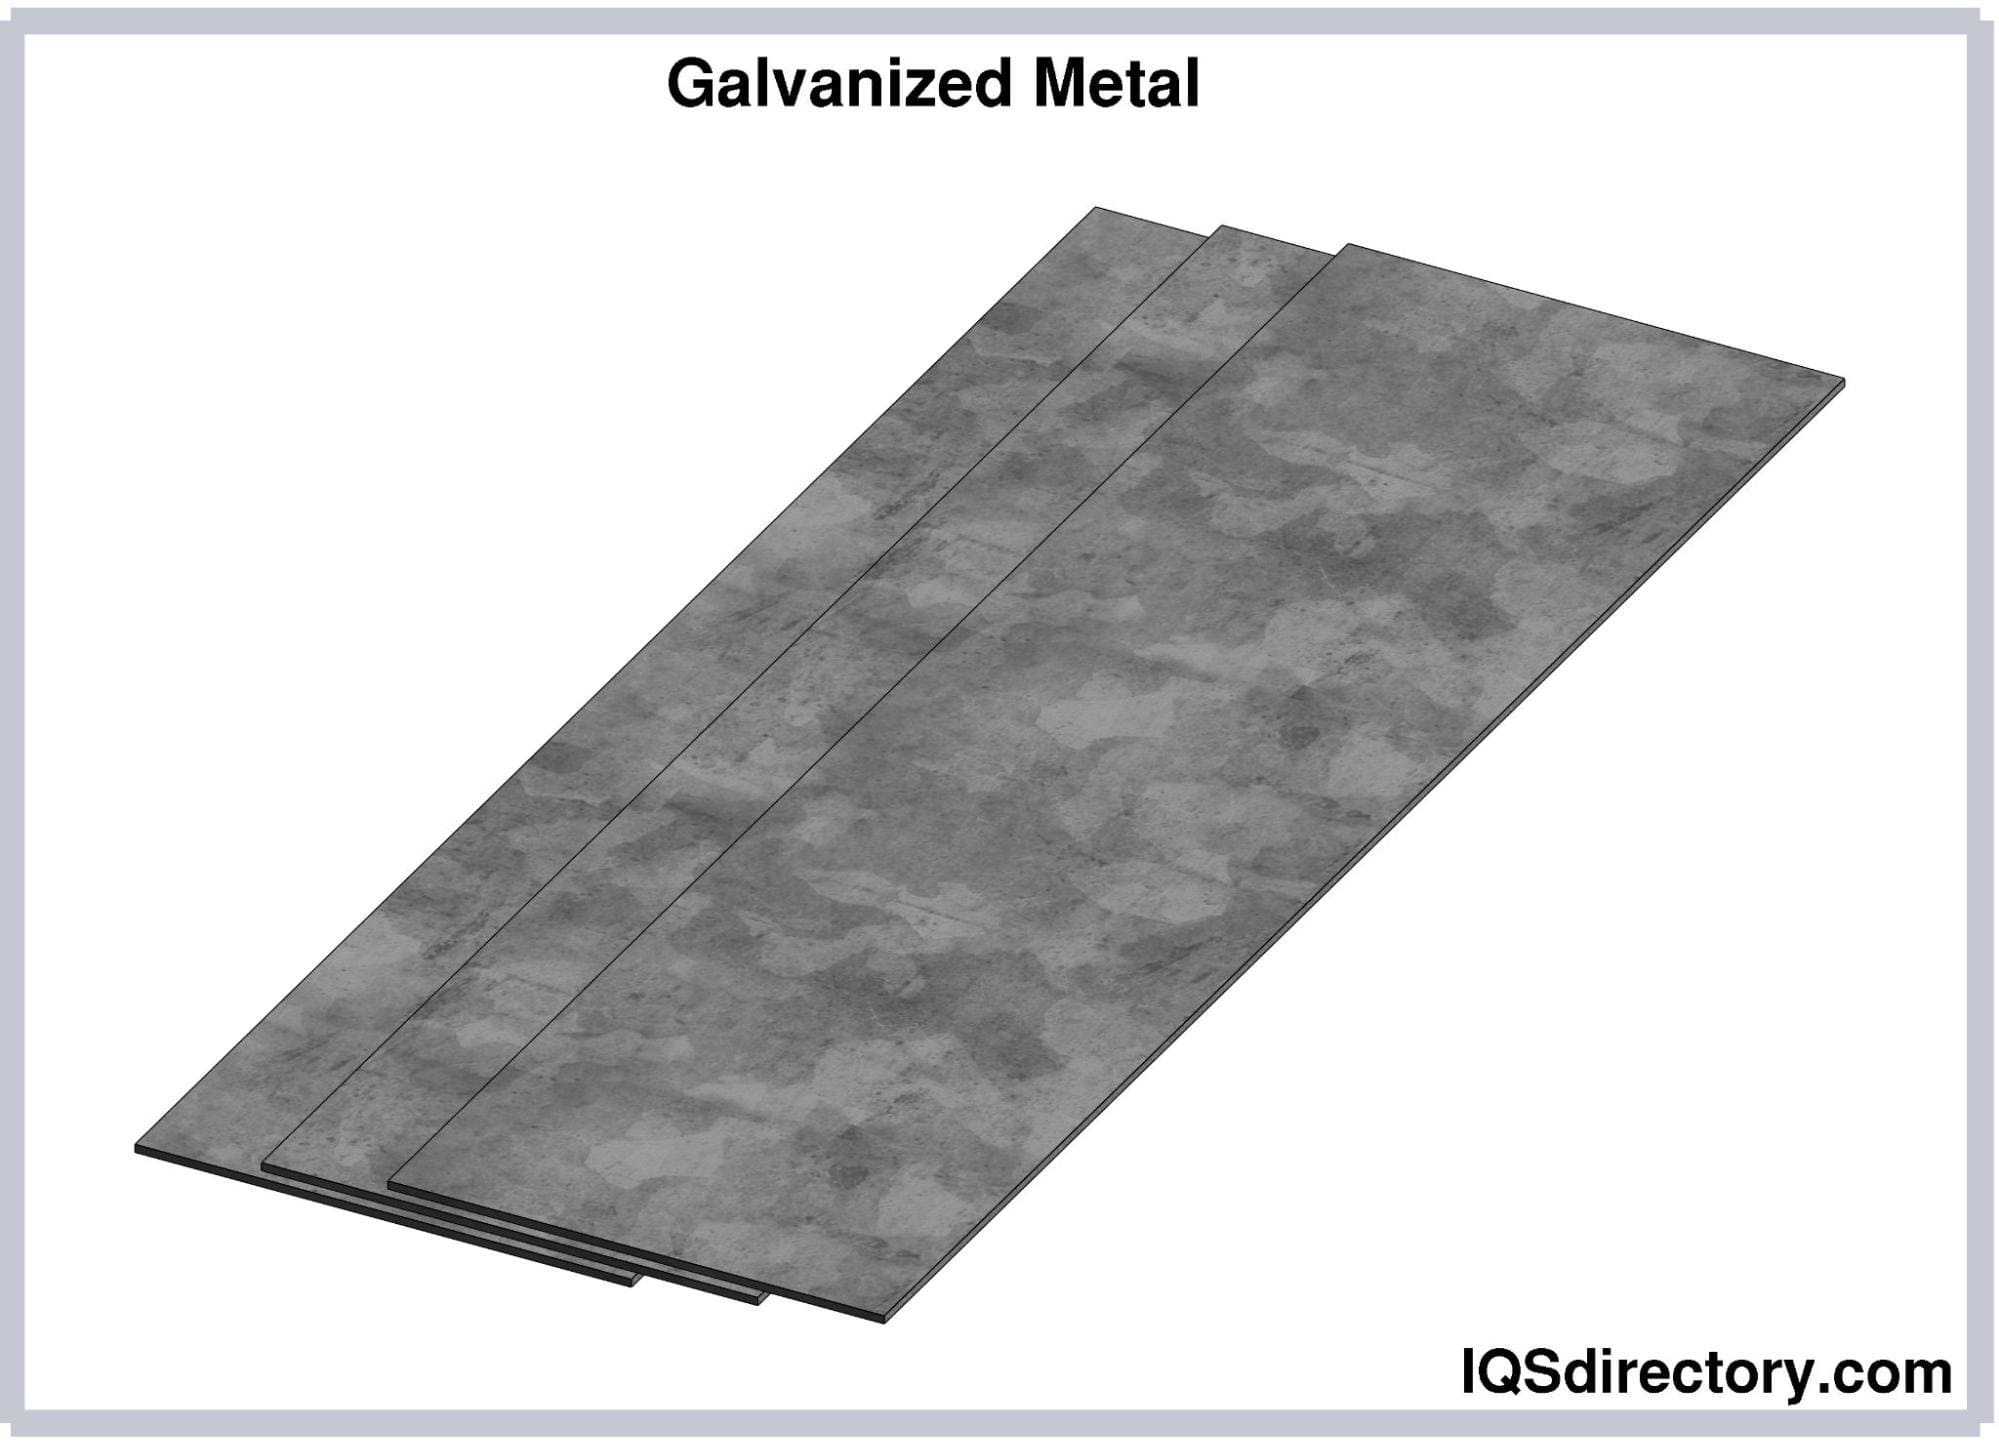 Galvanized Metal